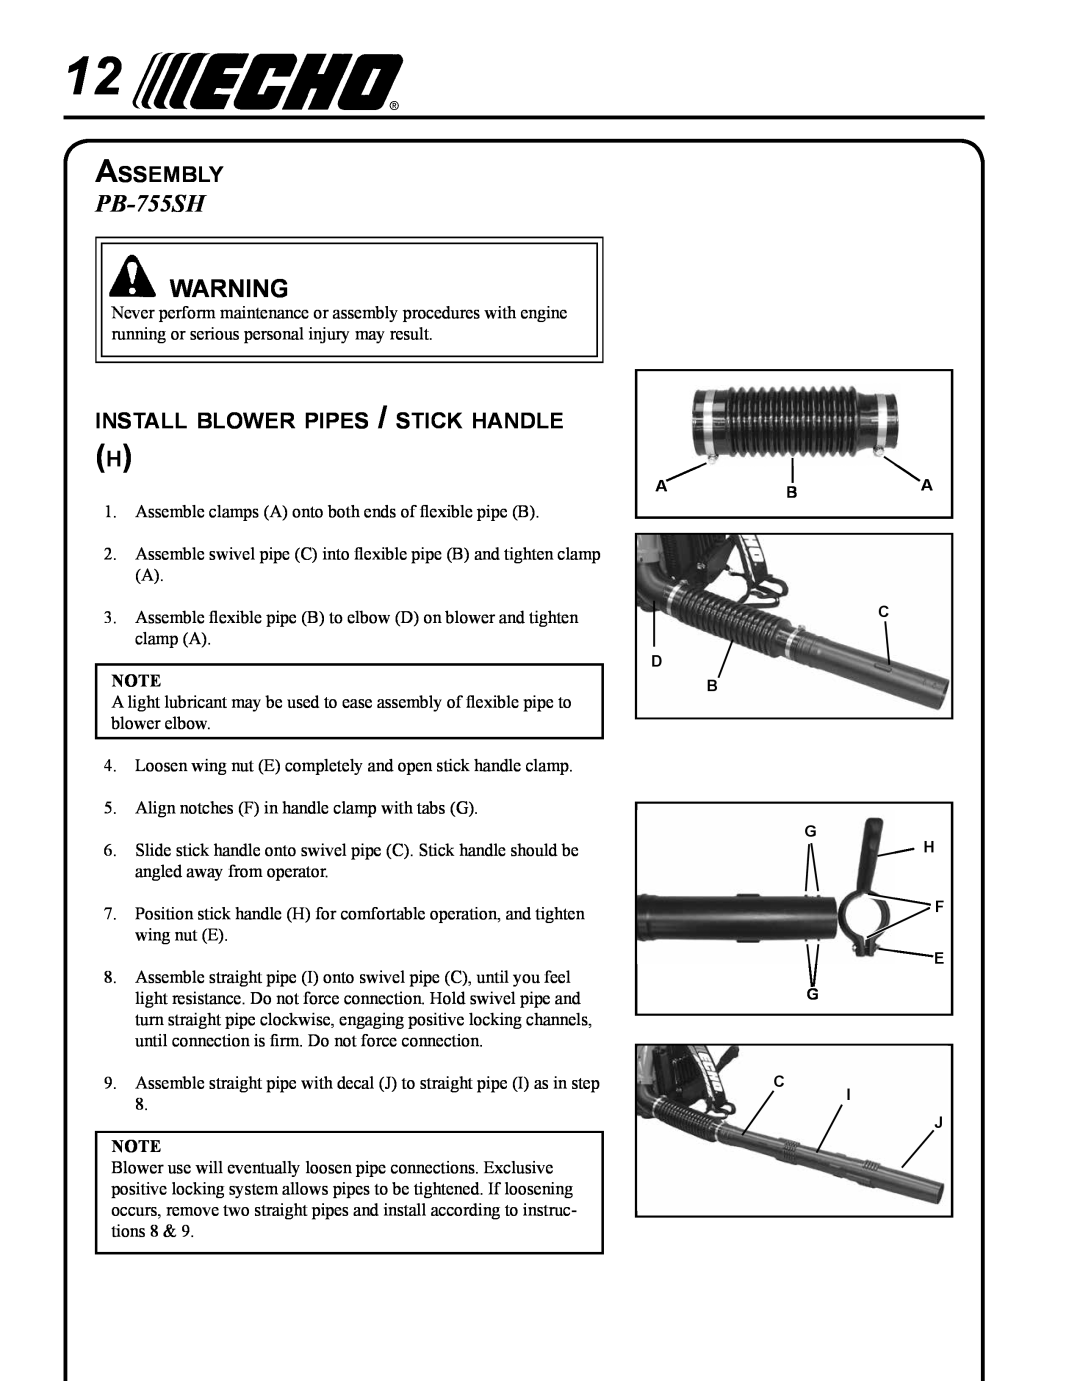 Echo PB-755S T, PB-755S H manual Assembly, install blower pipes / stick handle, PB-755SH 